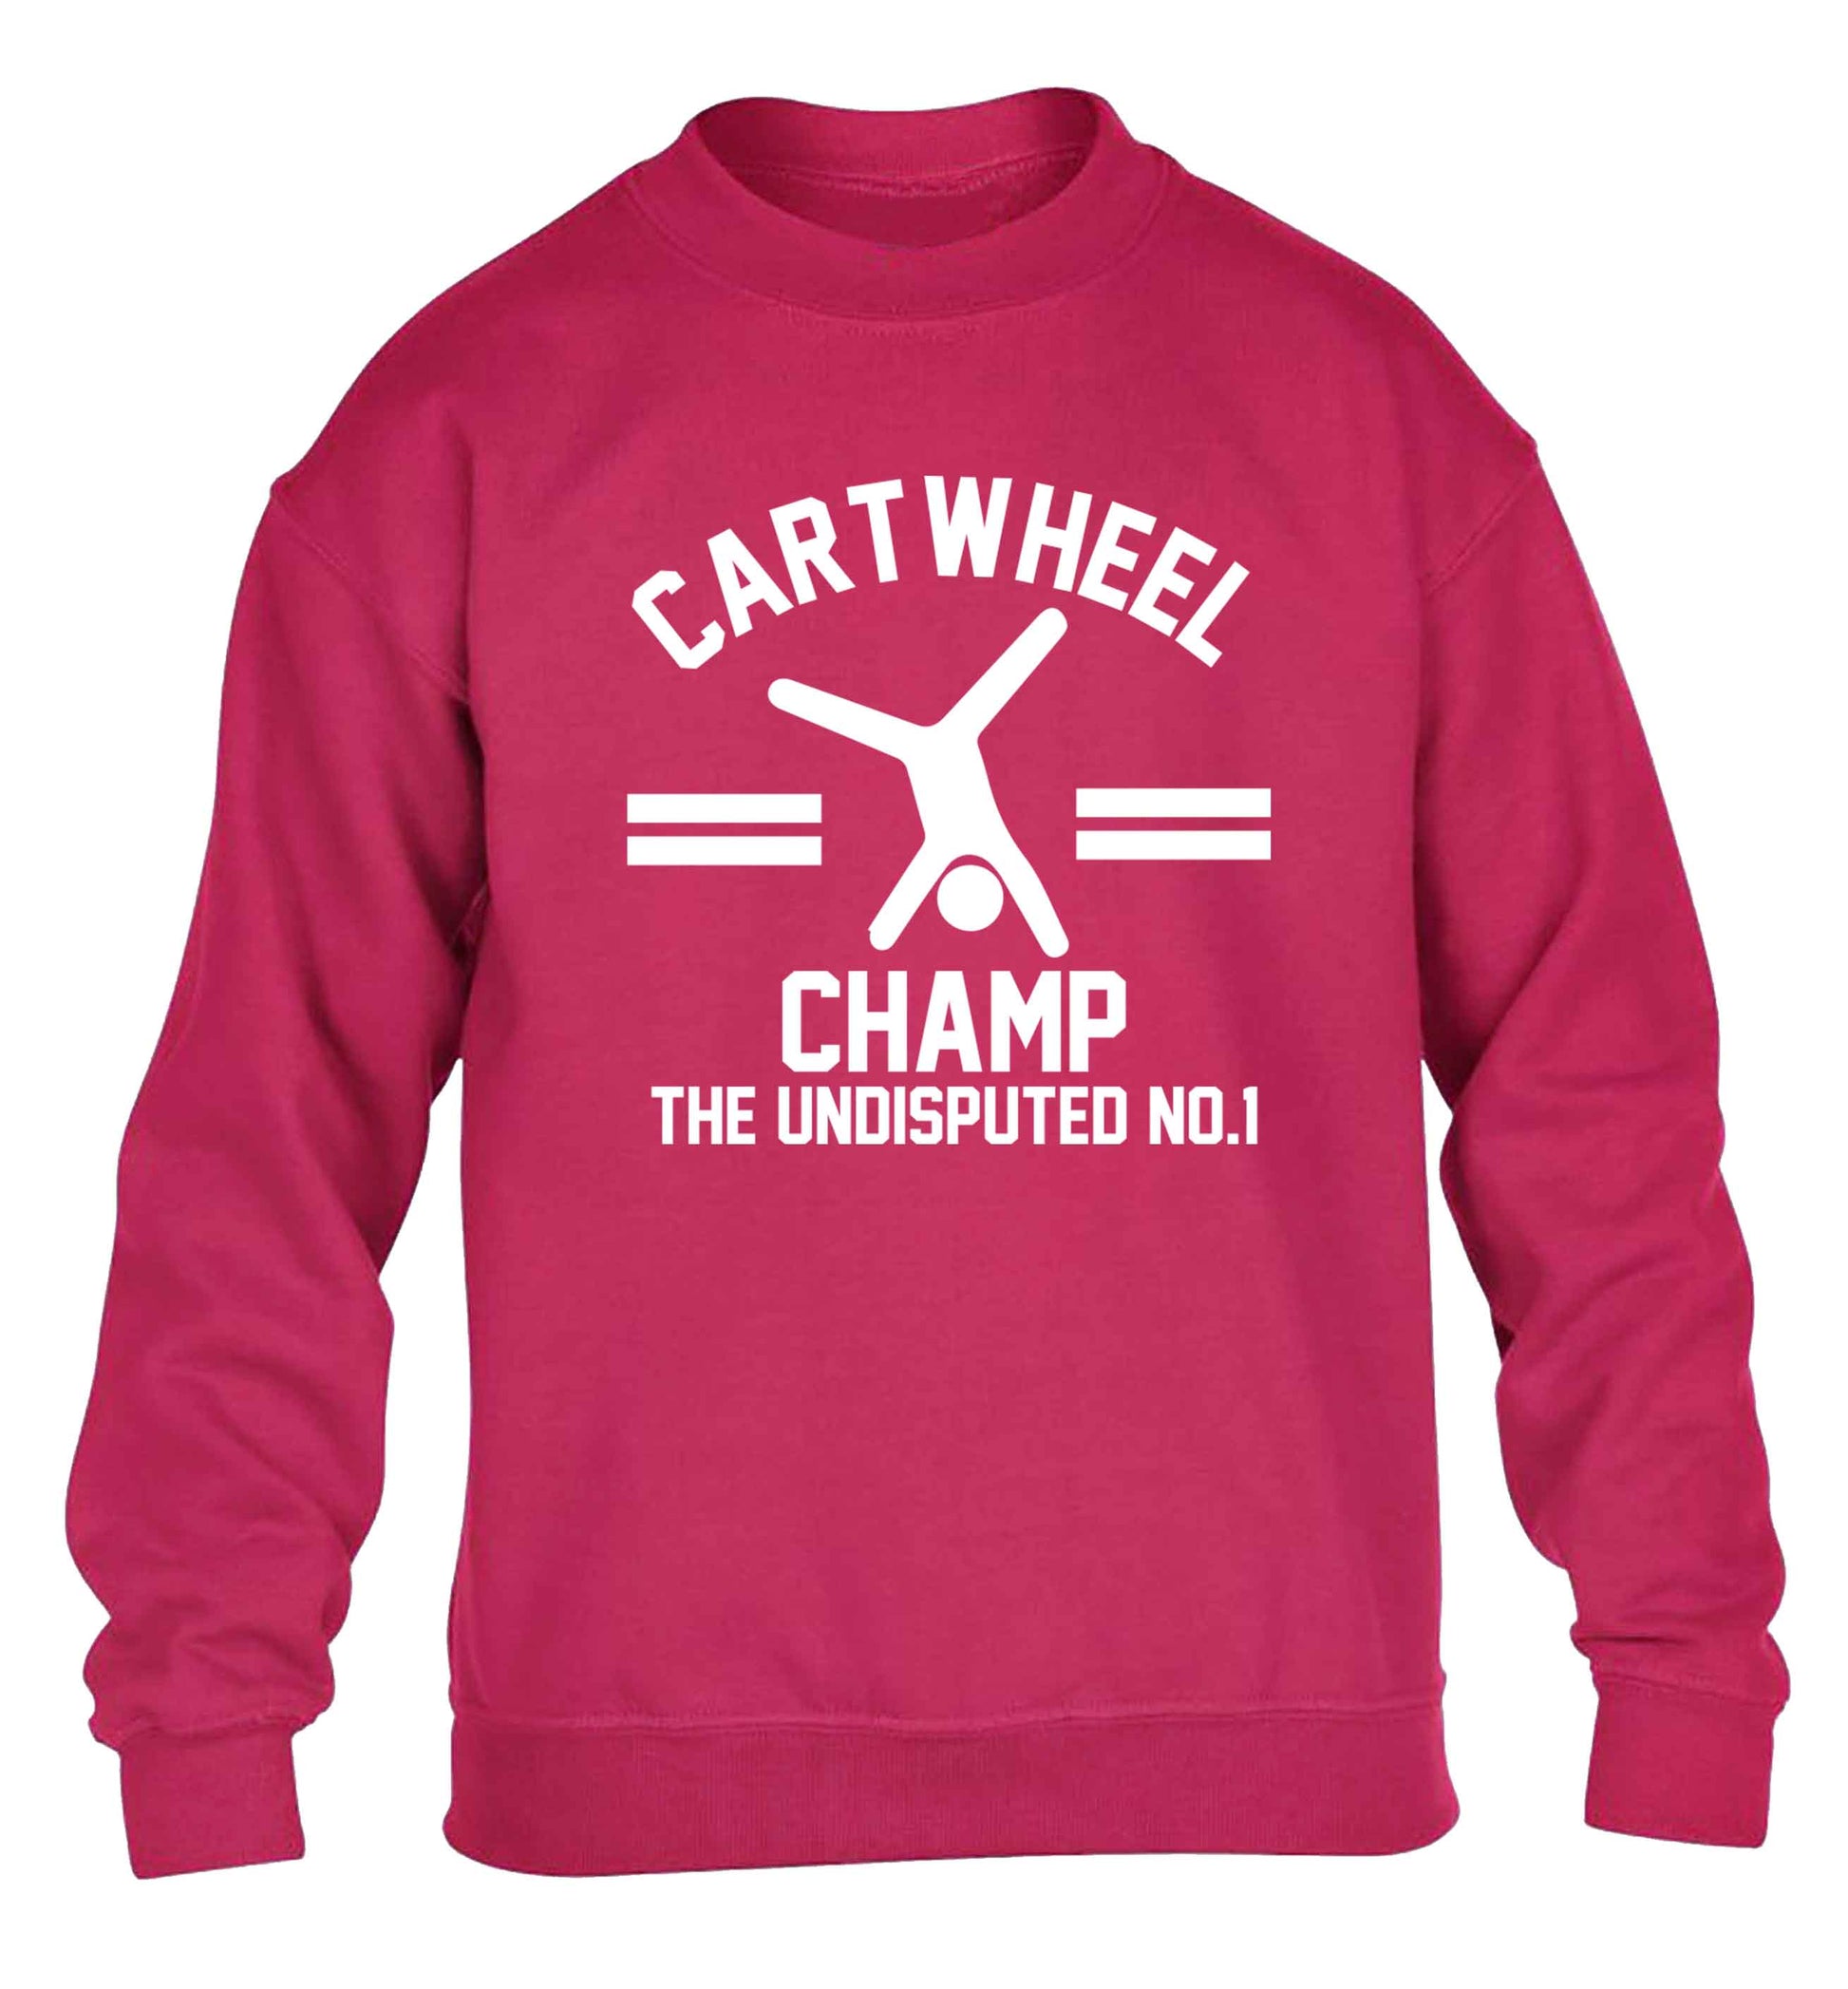 Undisputed cartwheel championship no.1  children's pink sweater 12-13 Years